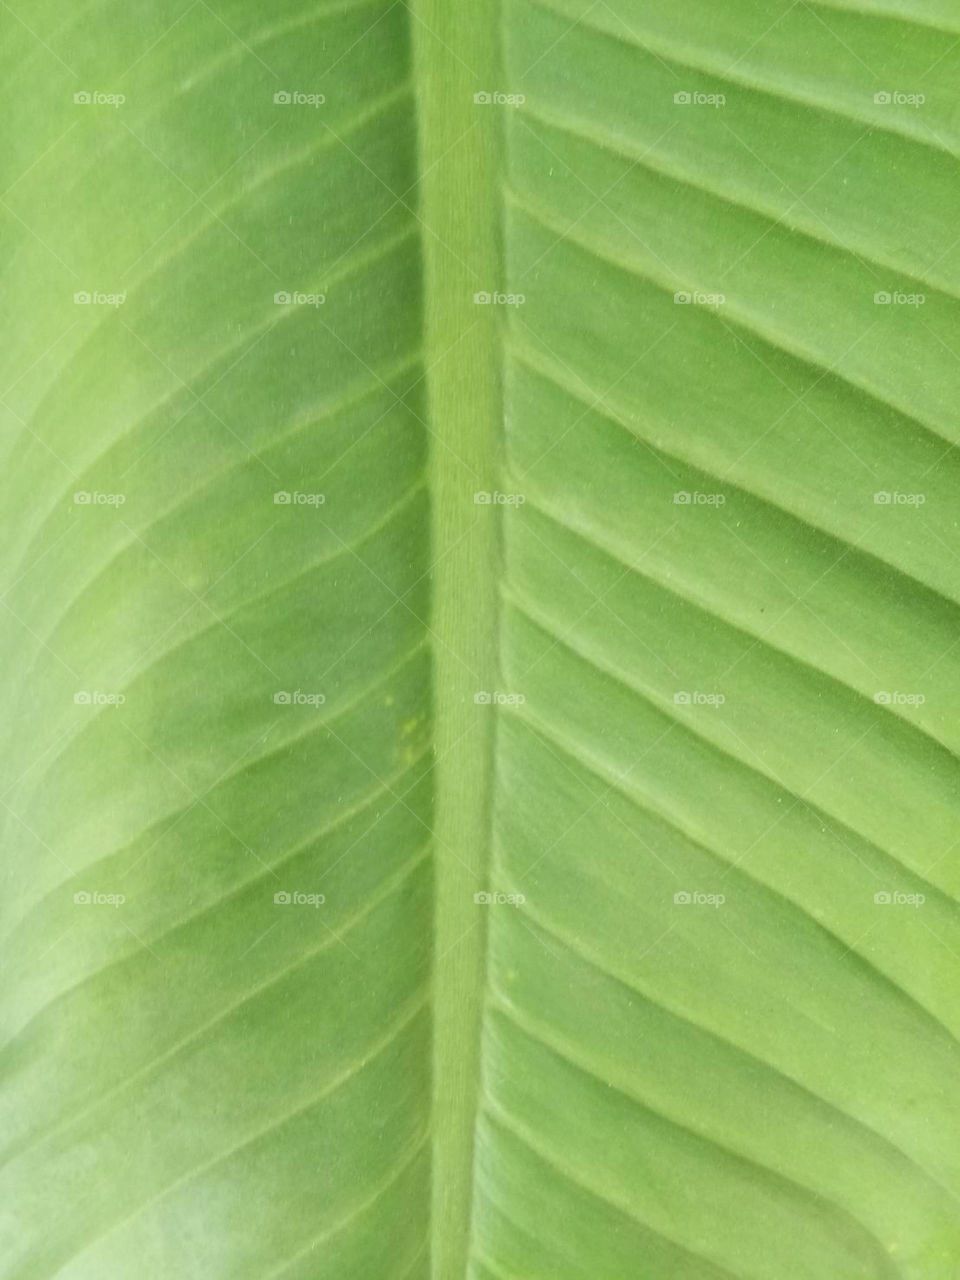 green
leaf